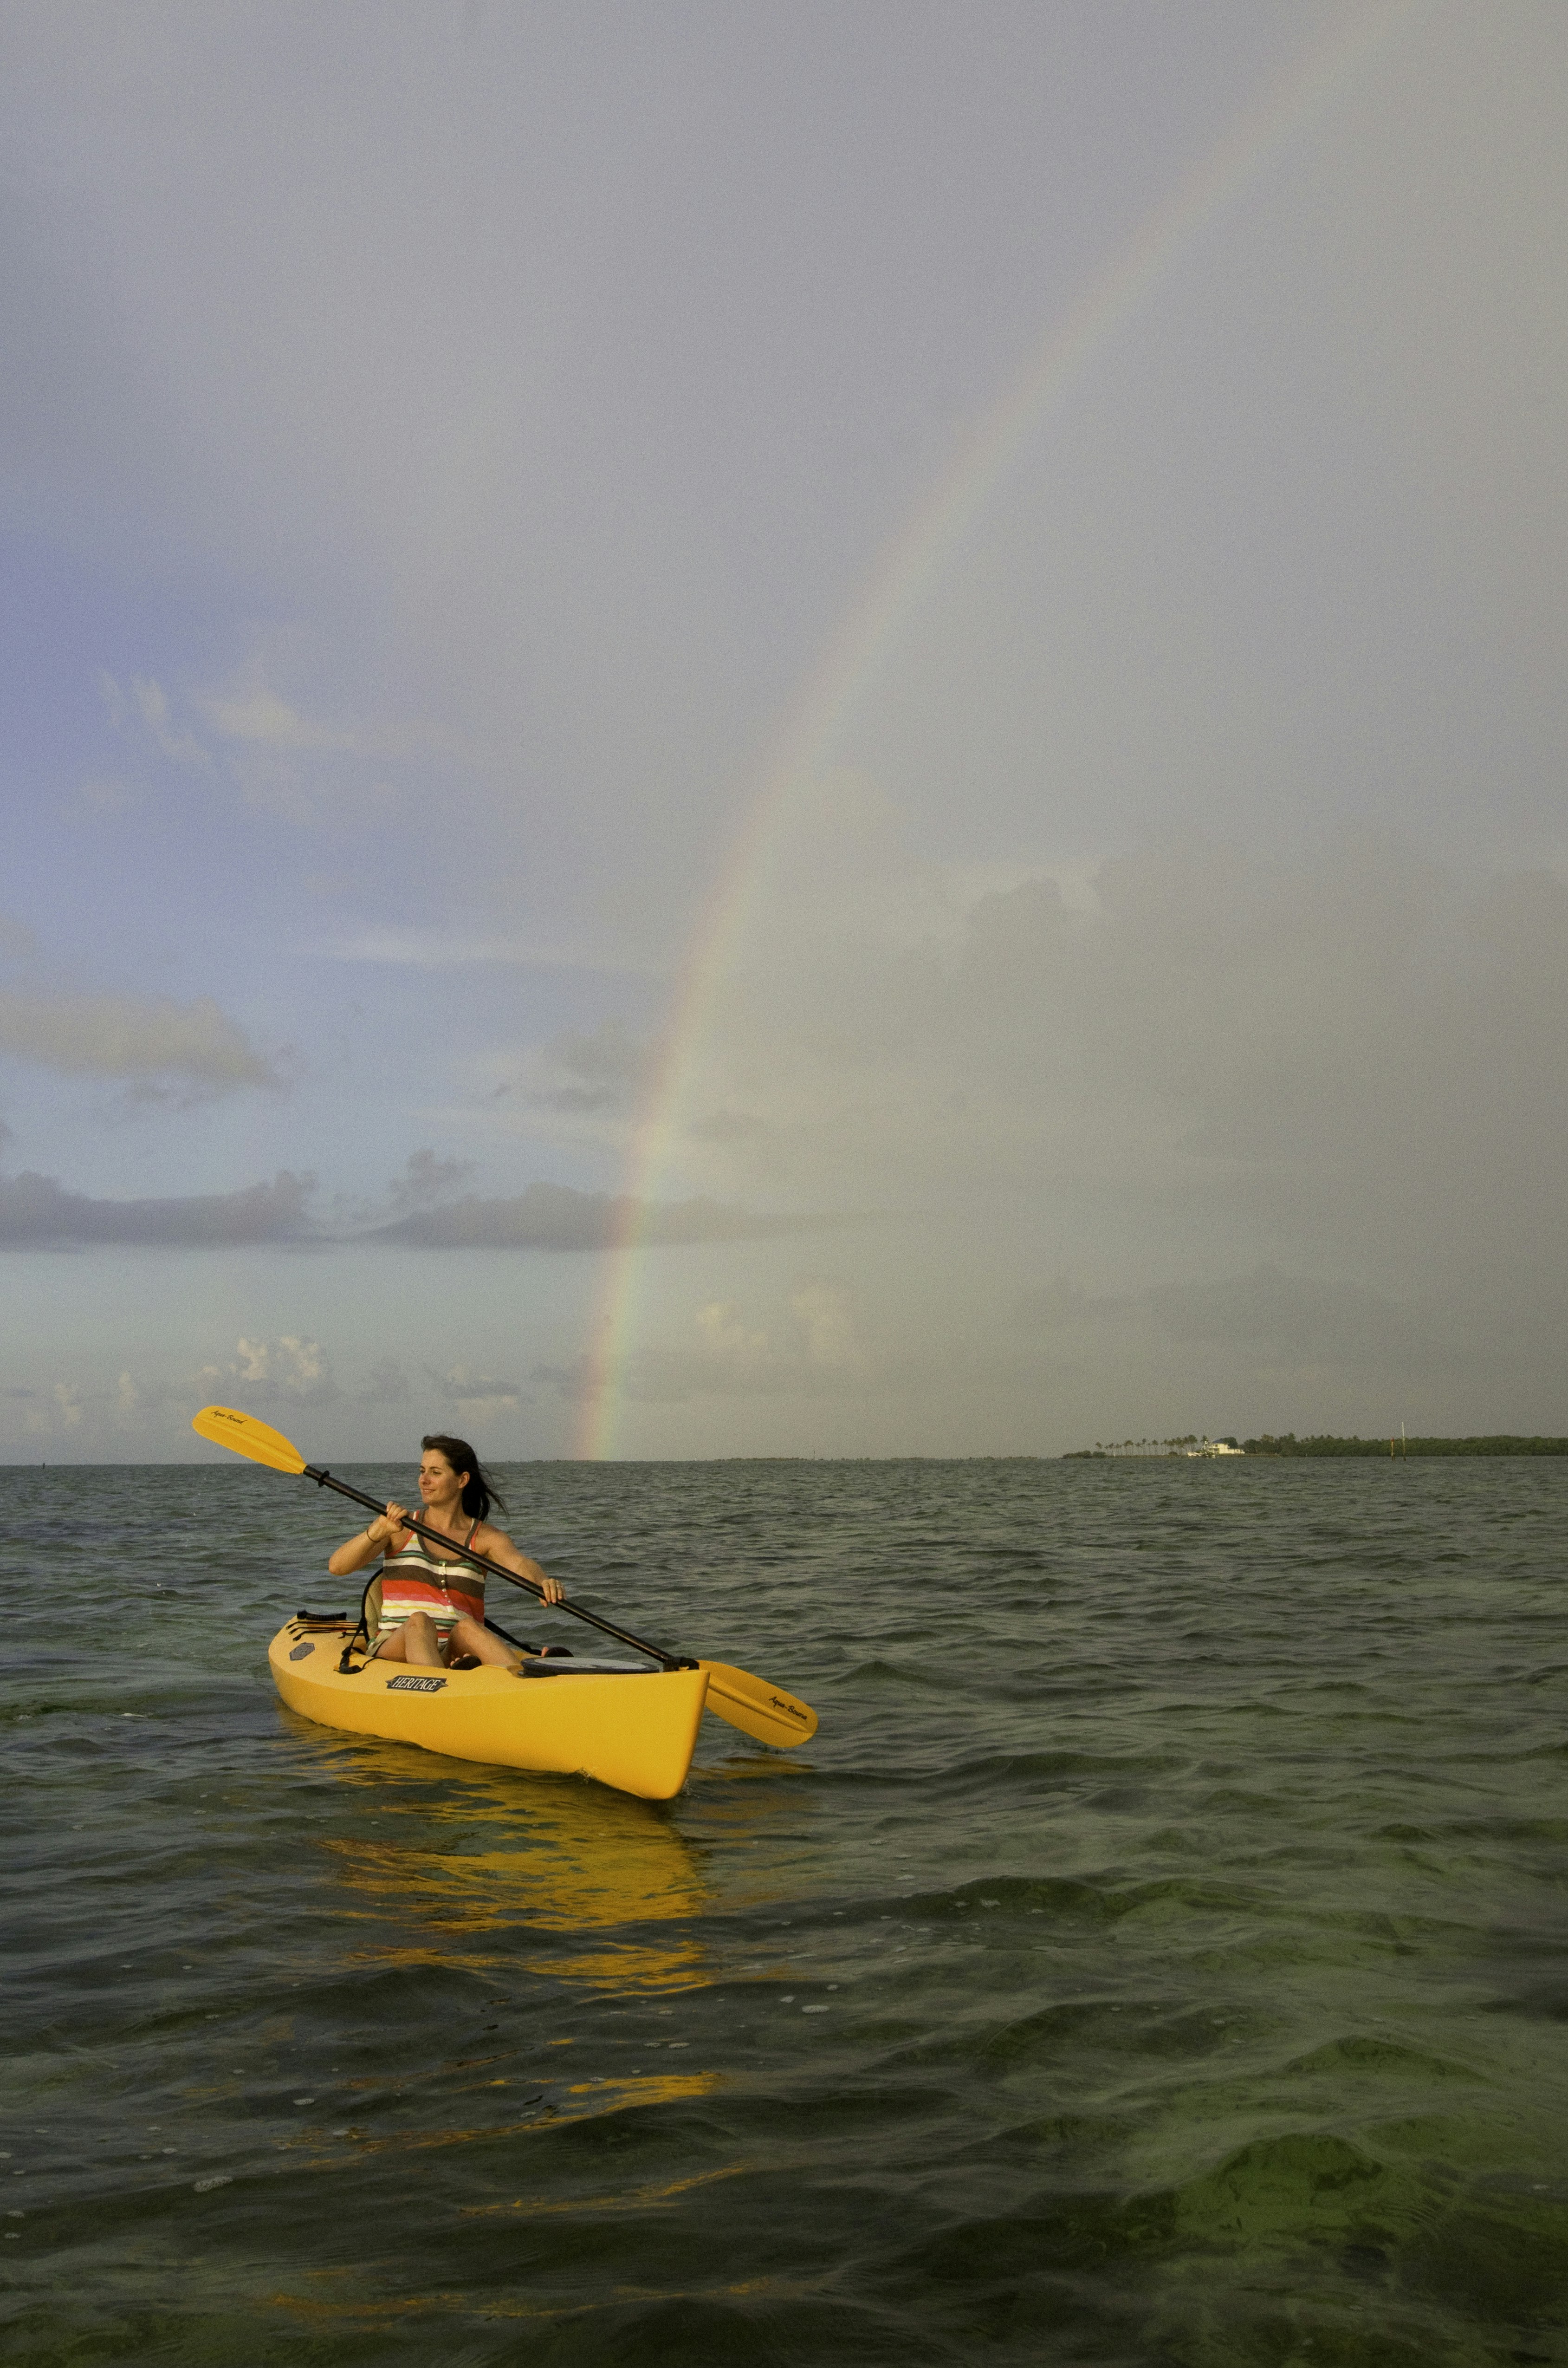 A woman paddles a kayak on the sea off Islamorada, Florida, as a rainbow lights up the morning sky behind her